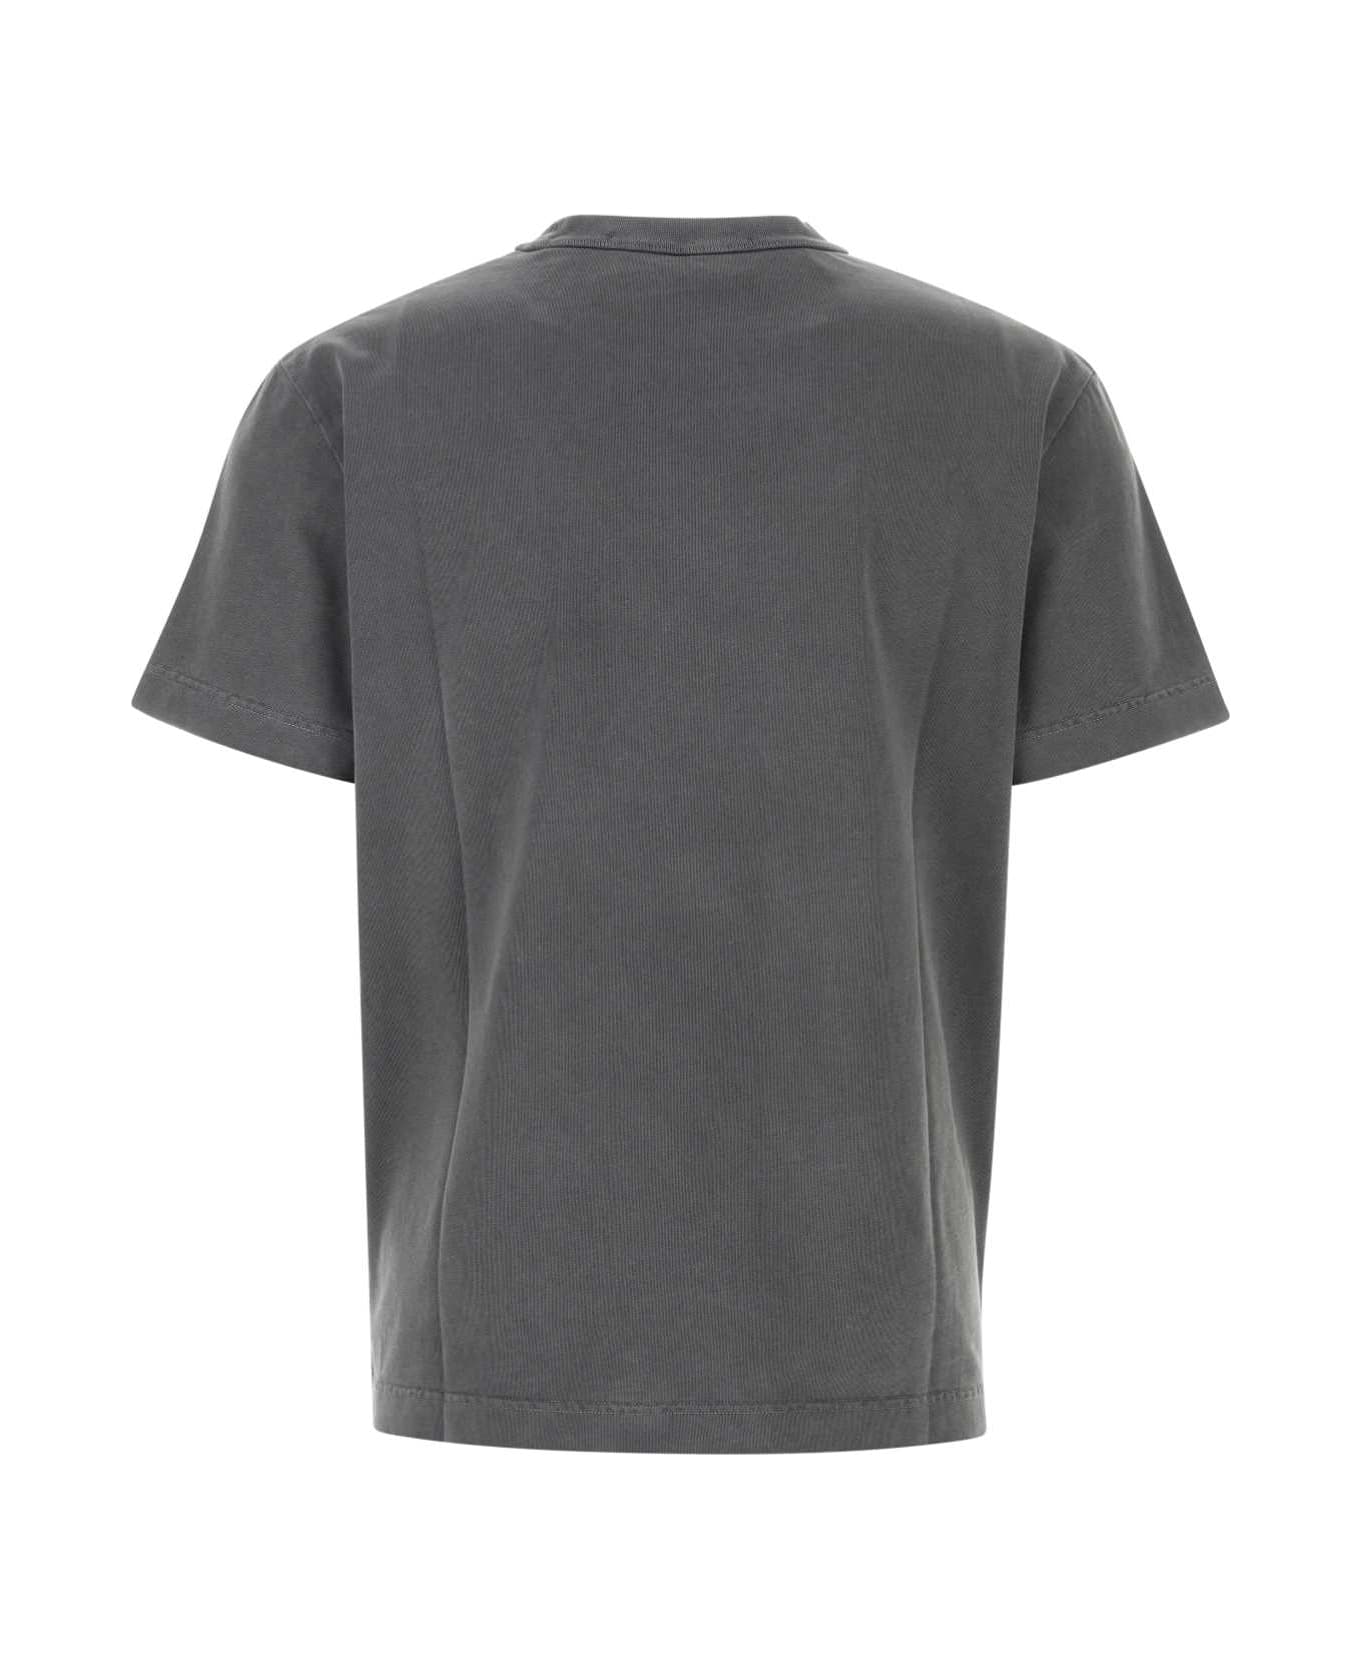 Alexander Wang Anthracite Cotton T-shirt - WASHEDBLACK Tシャツ